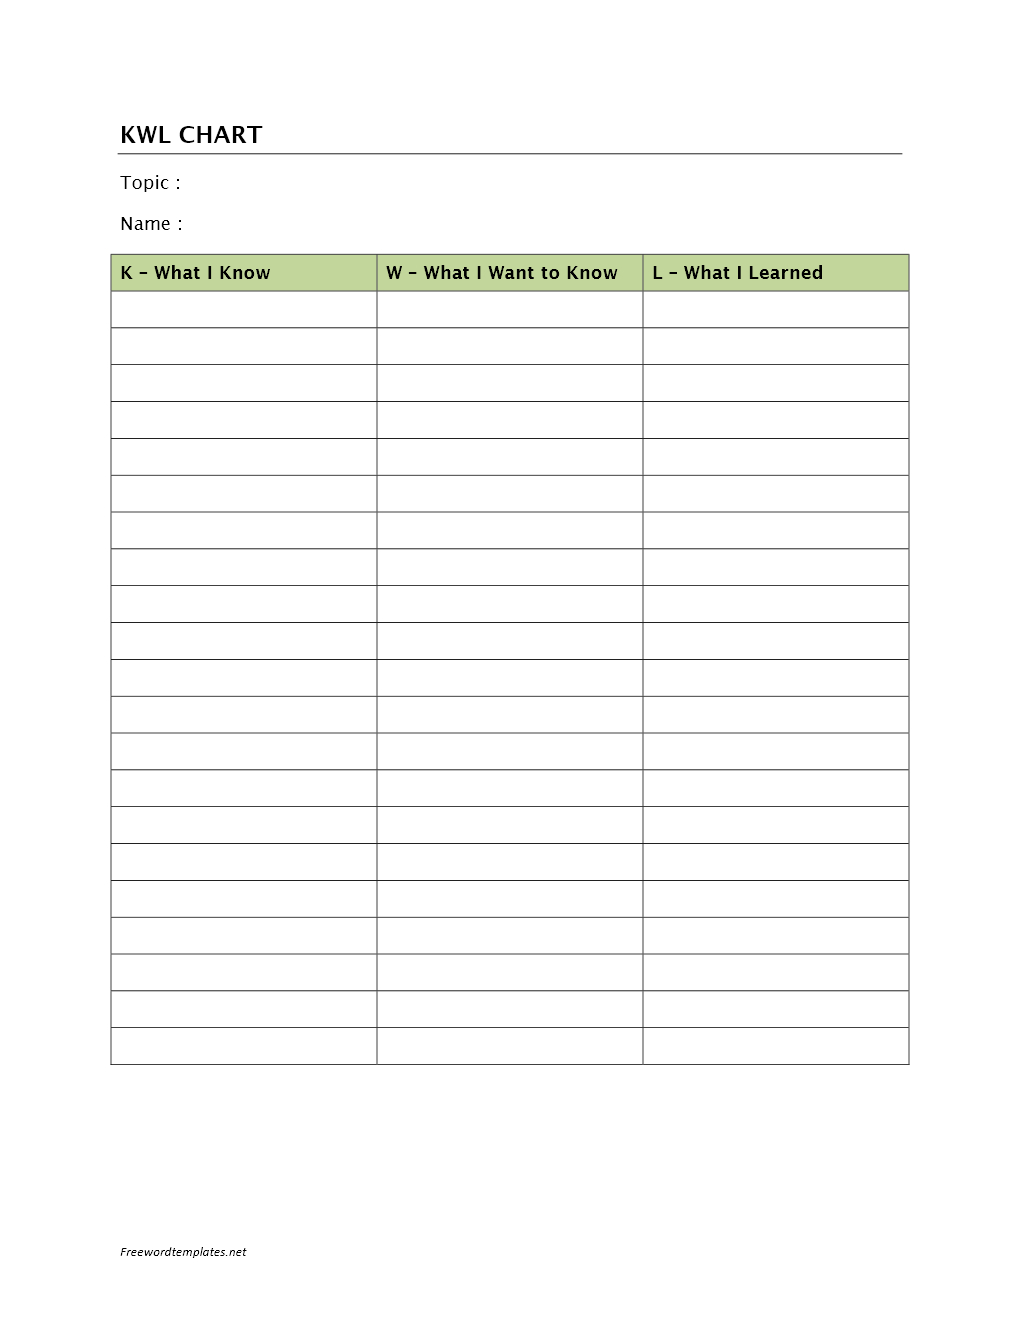 Kwl Chart Template Word | Sample Customer Service Resume For Kwl Chart Template Word Document